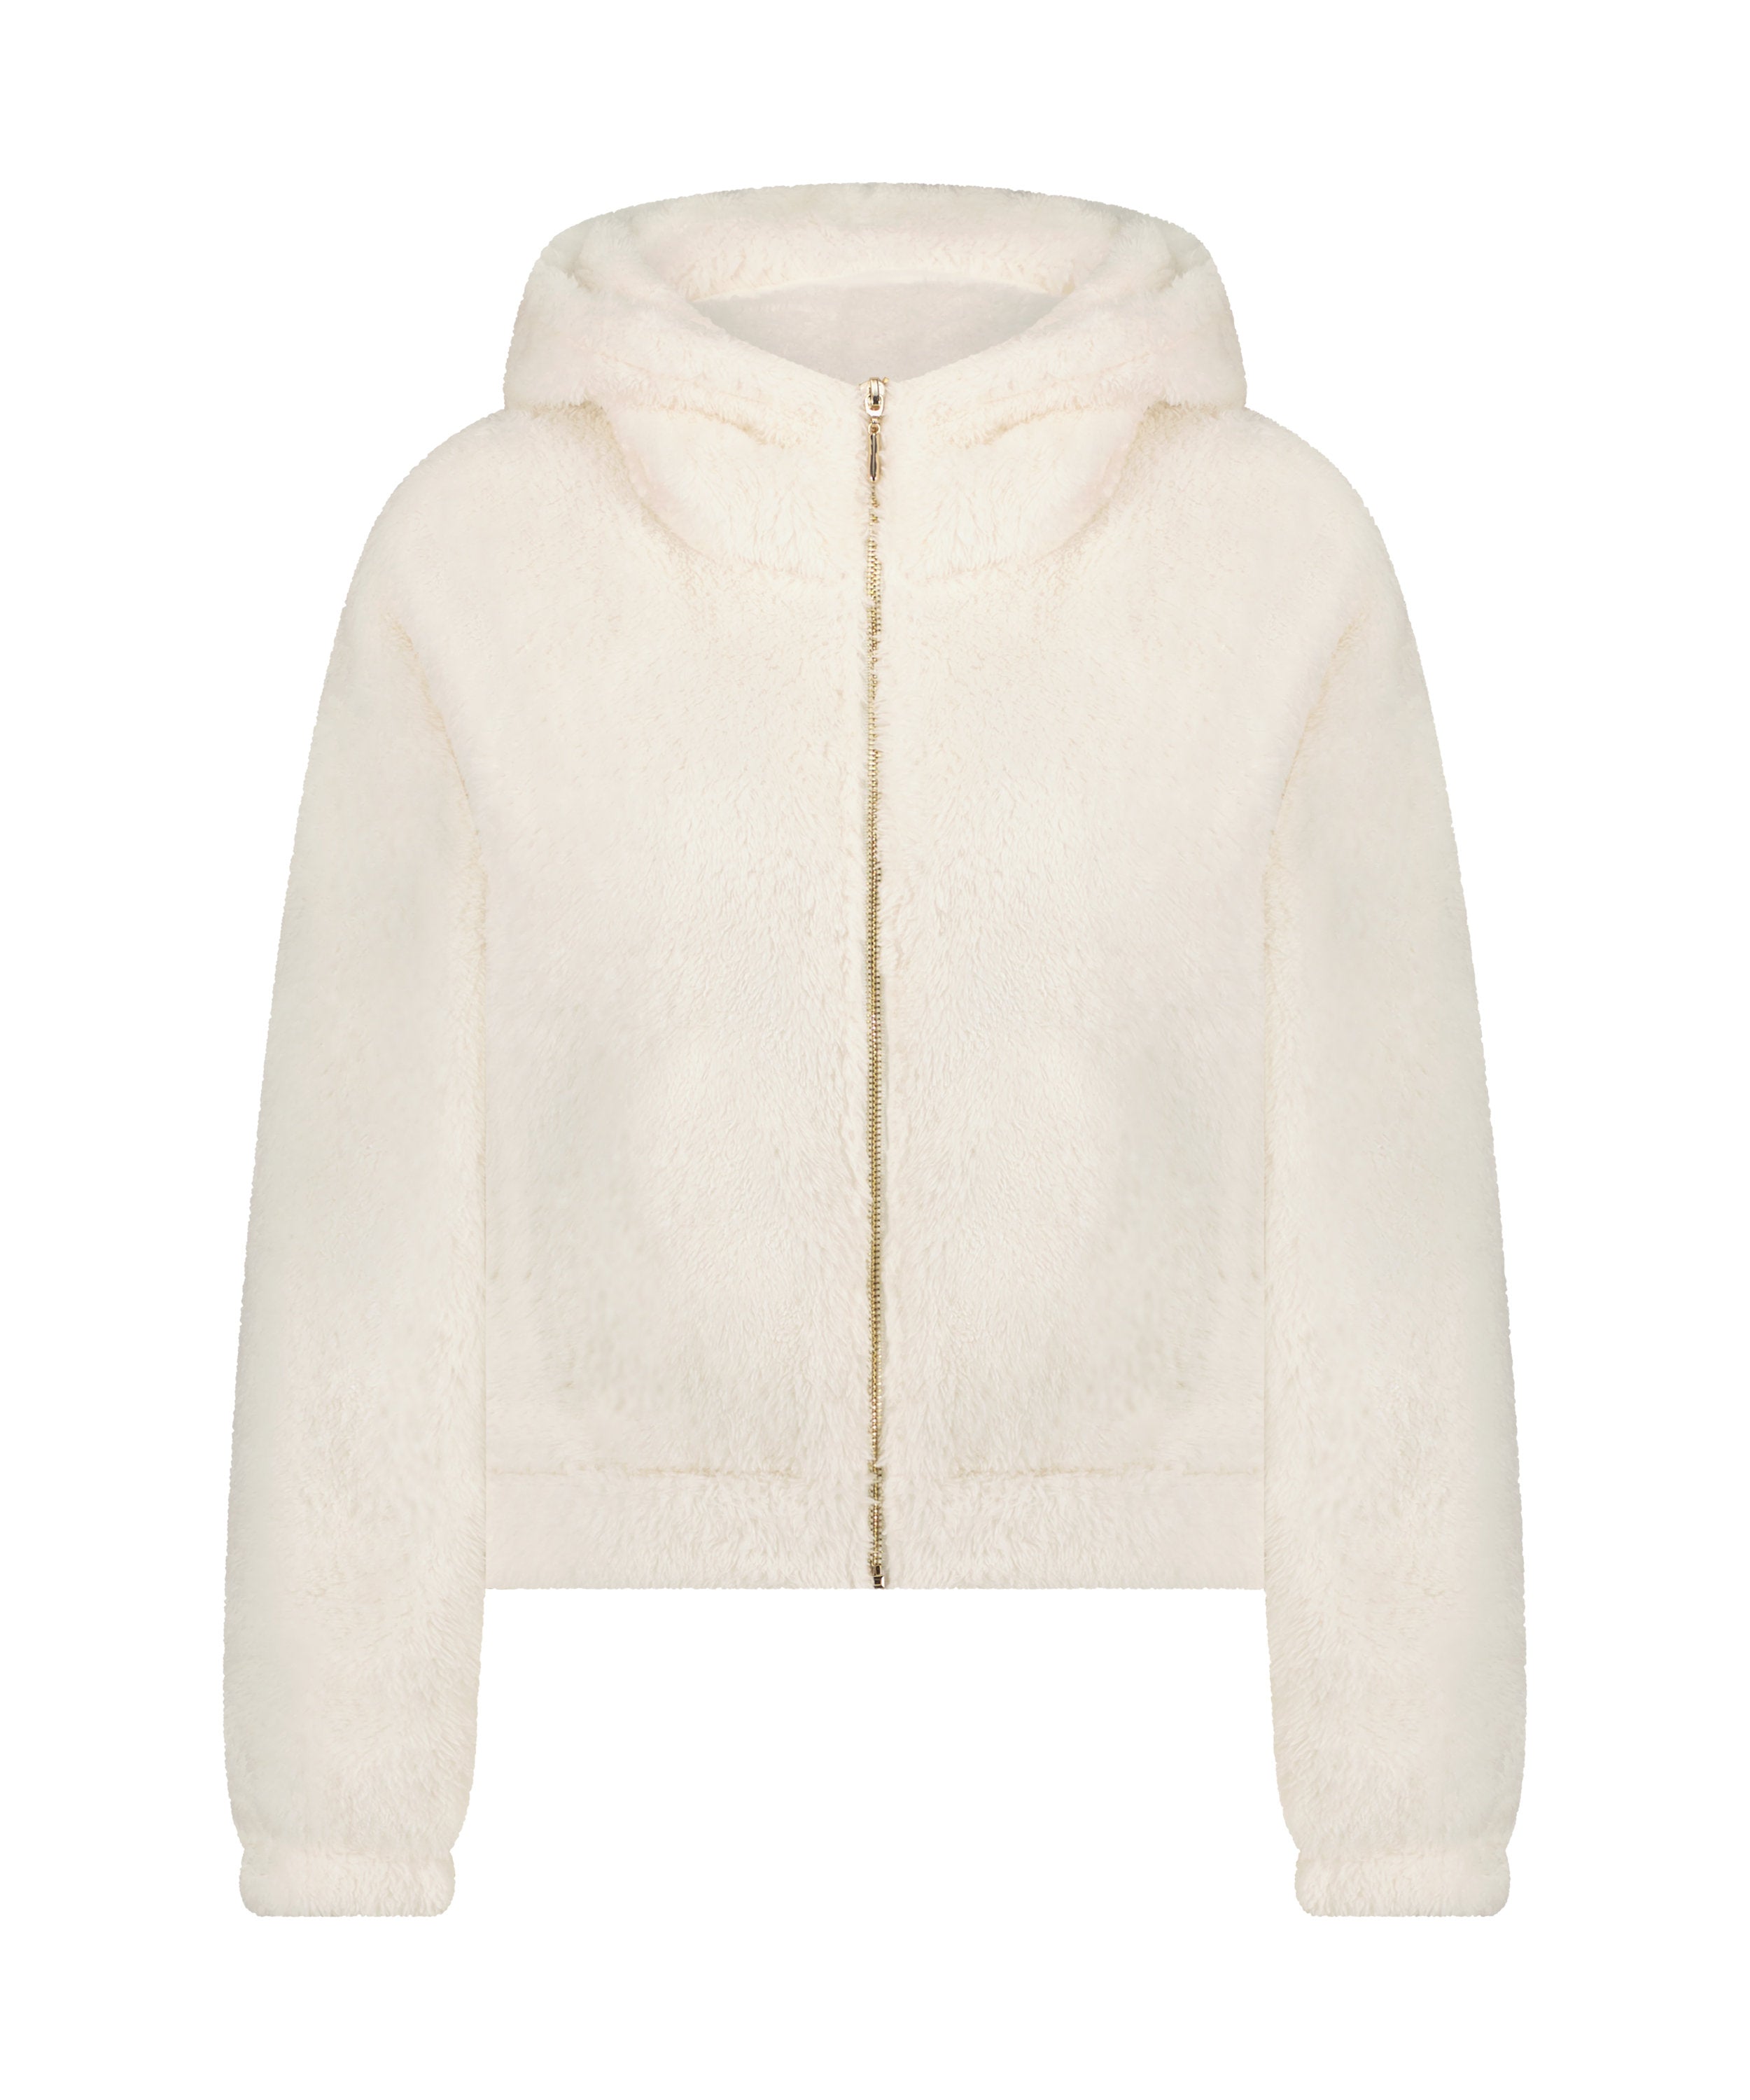 Jacket Long Sleeve Fleece Snuggle_204230_Snow White_05